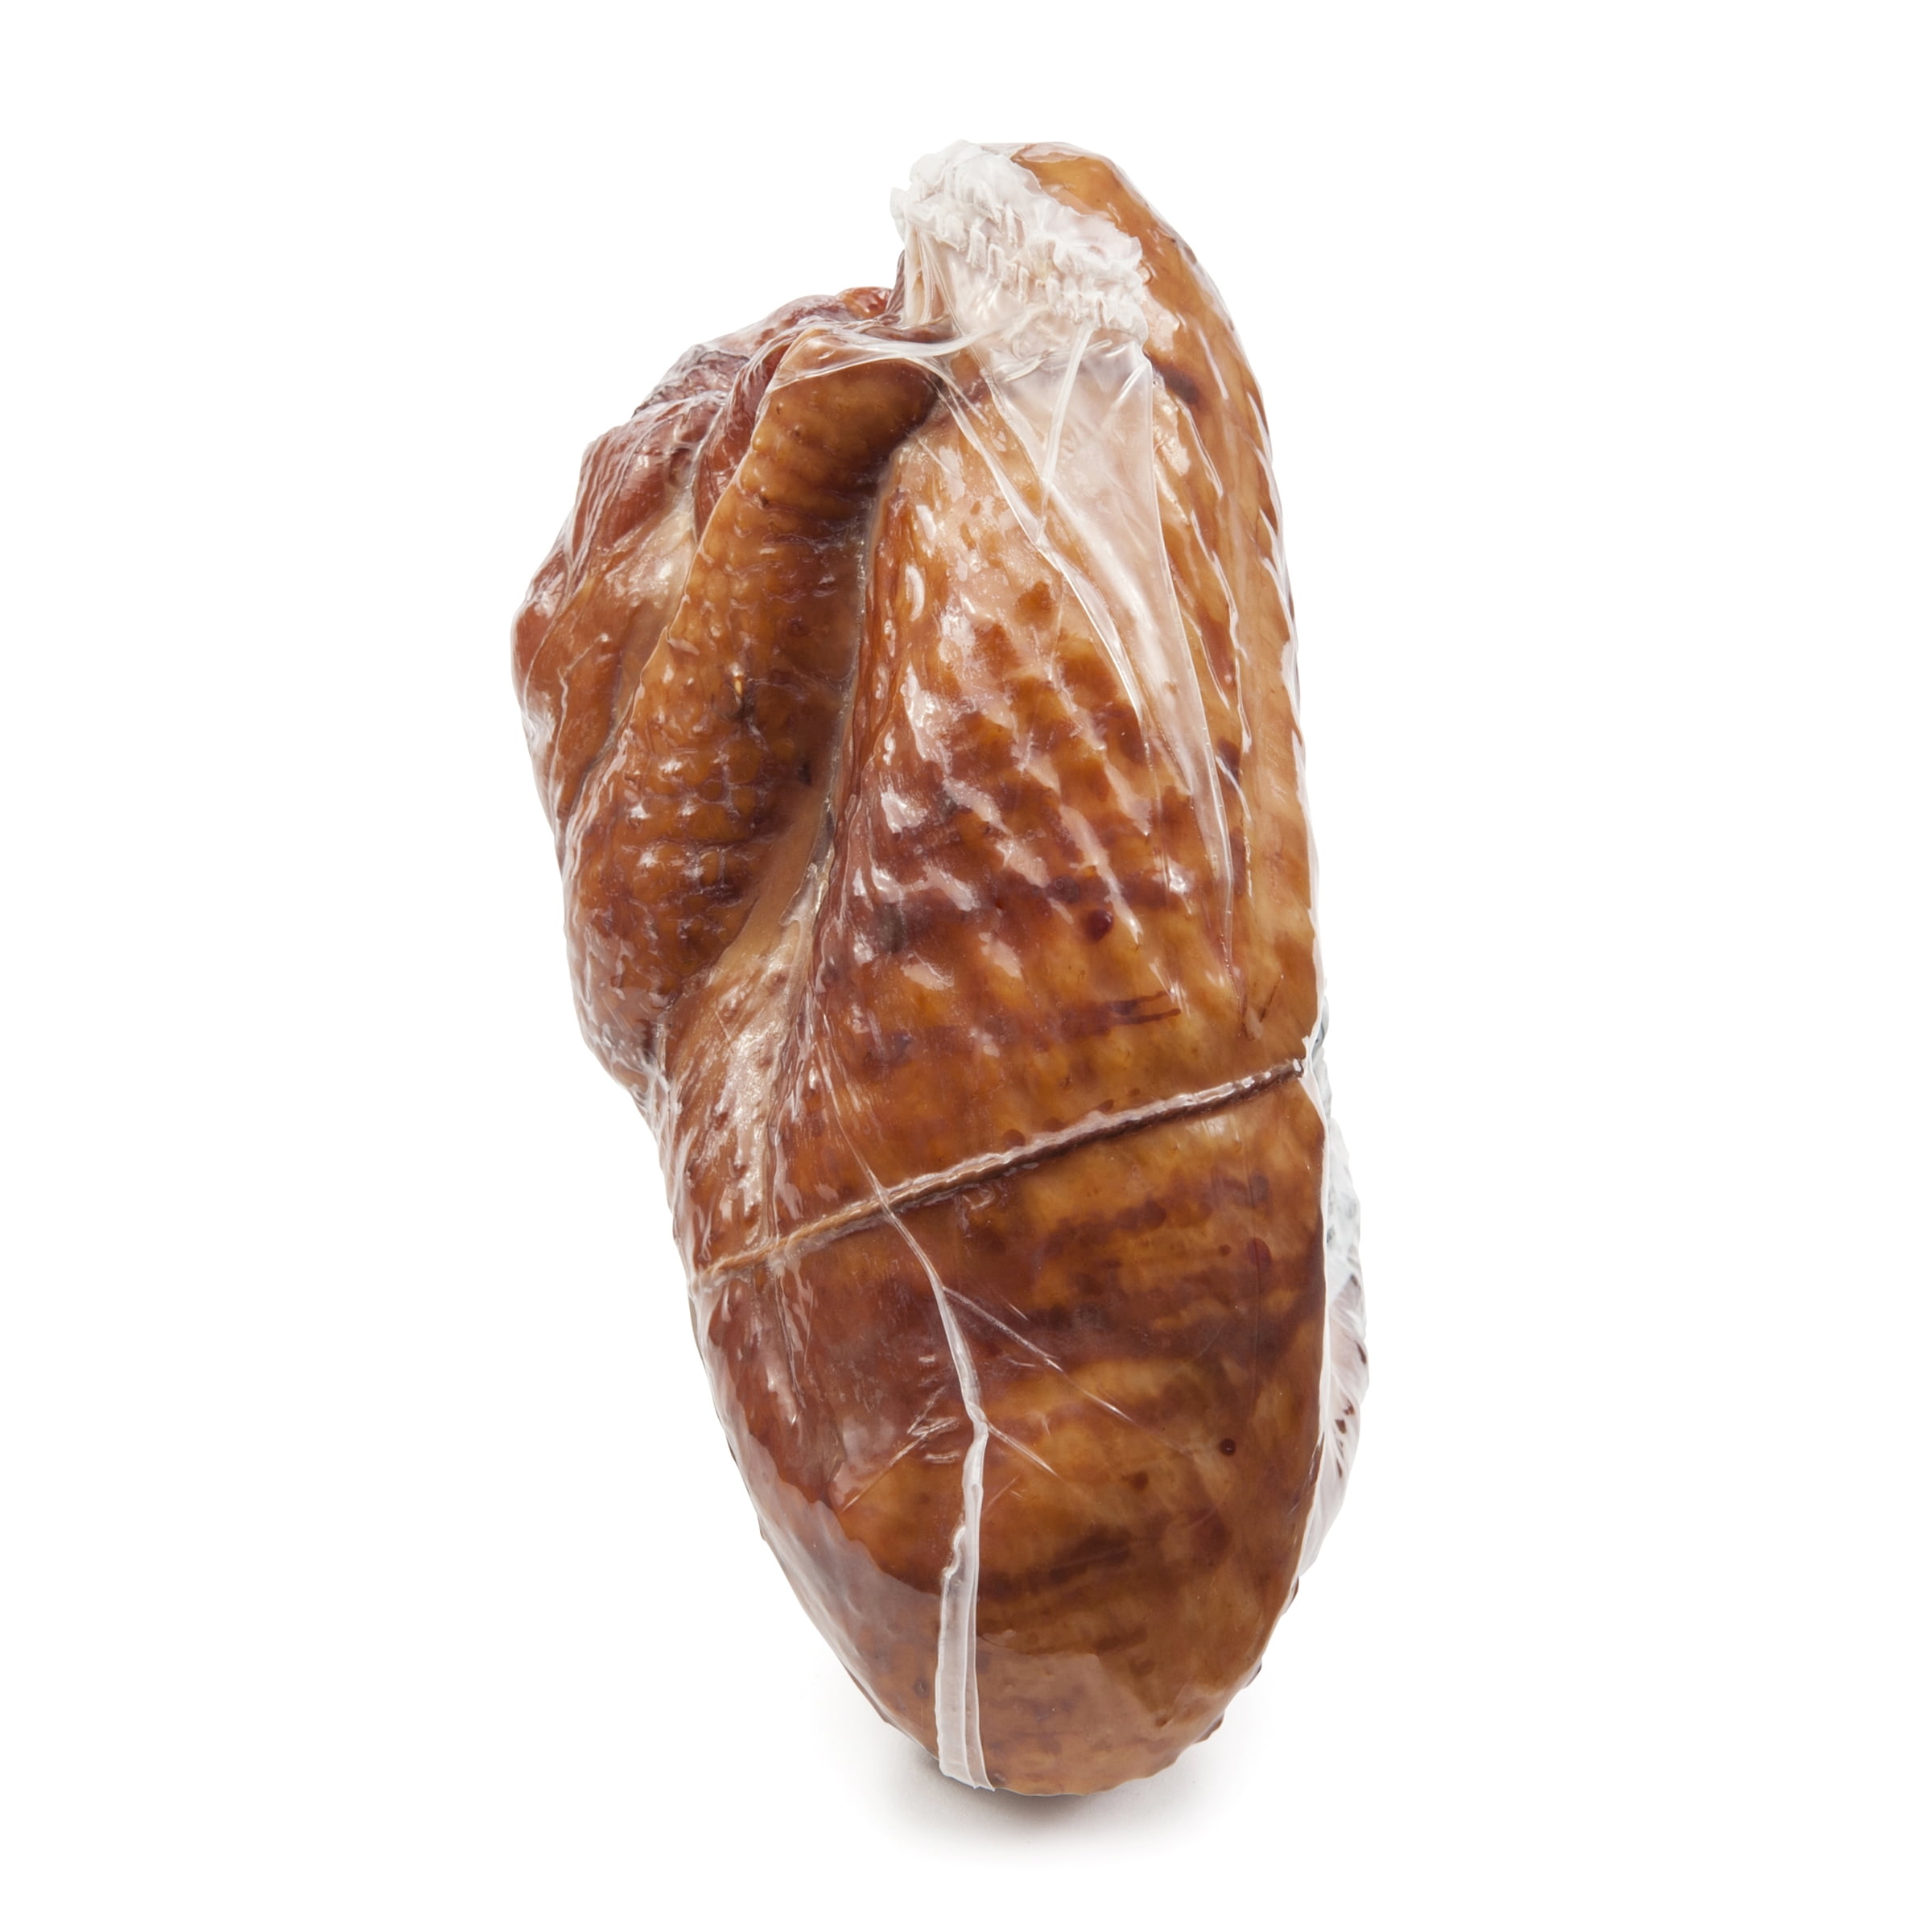 Steggles Shop Laverton - Buy Bulk & Save! 12kg Fresh Turkey Wings